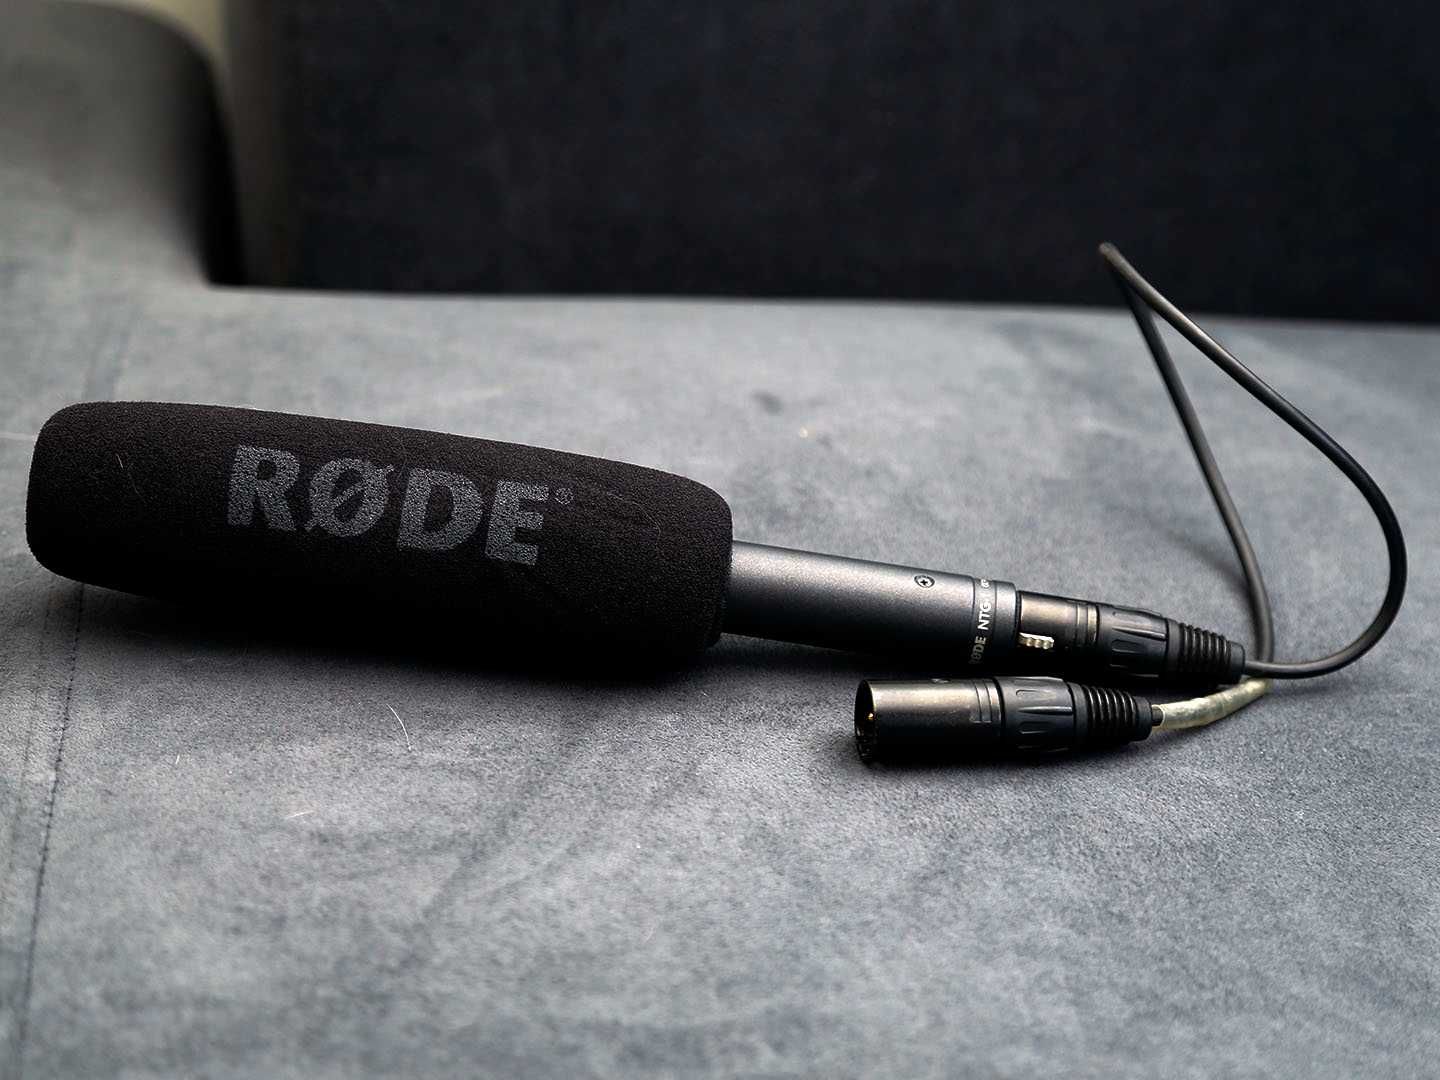 RODE Microfone NTG-1